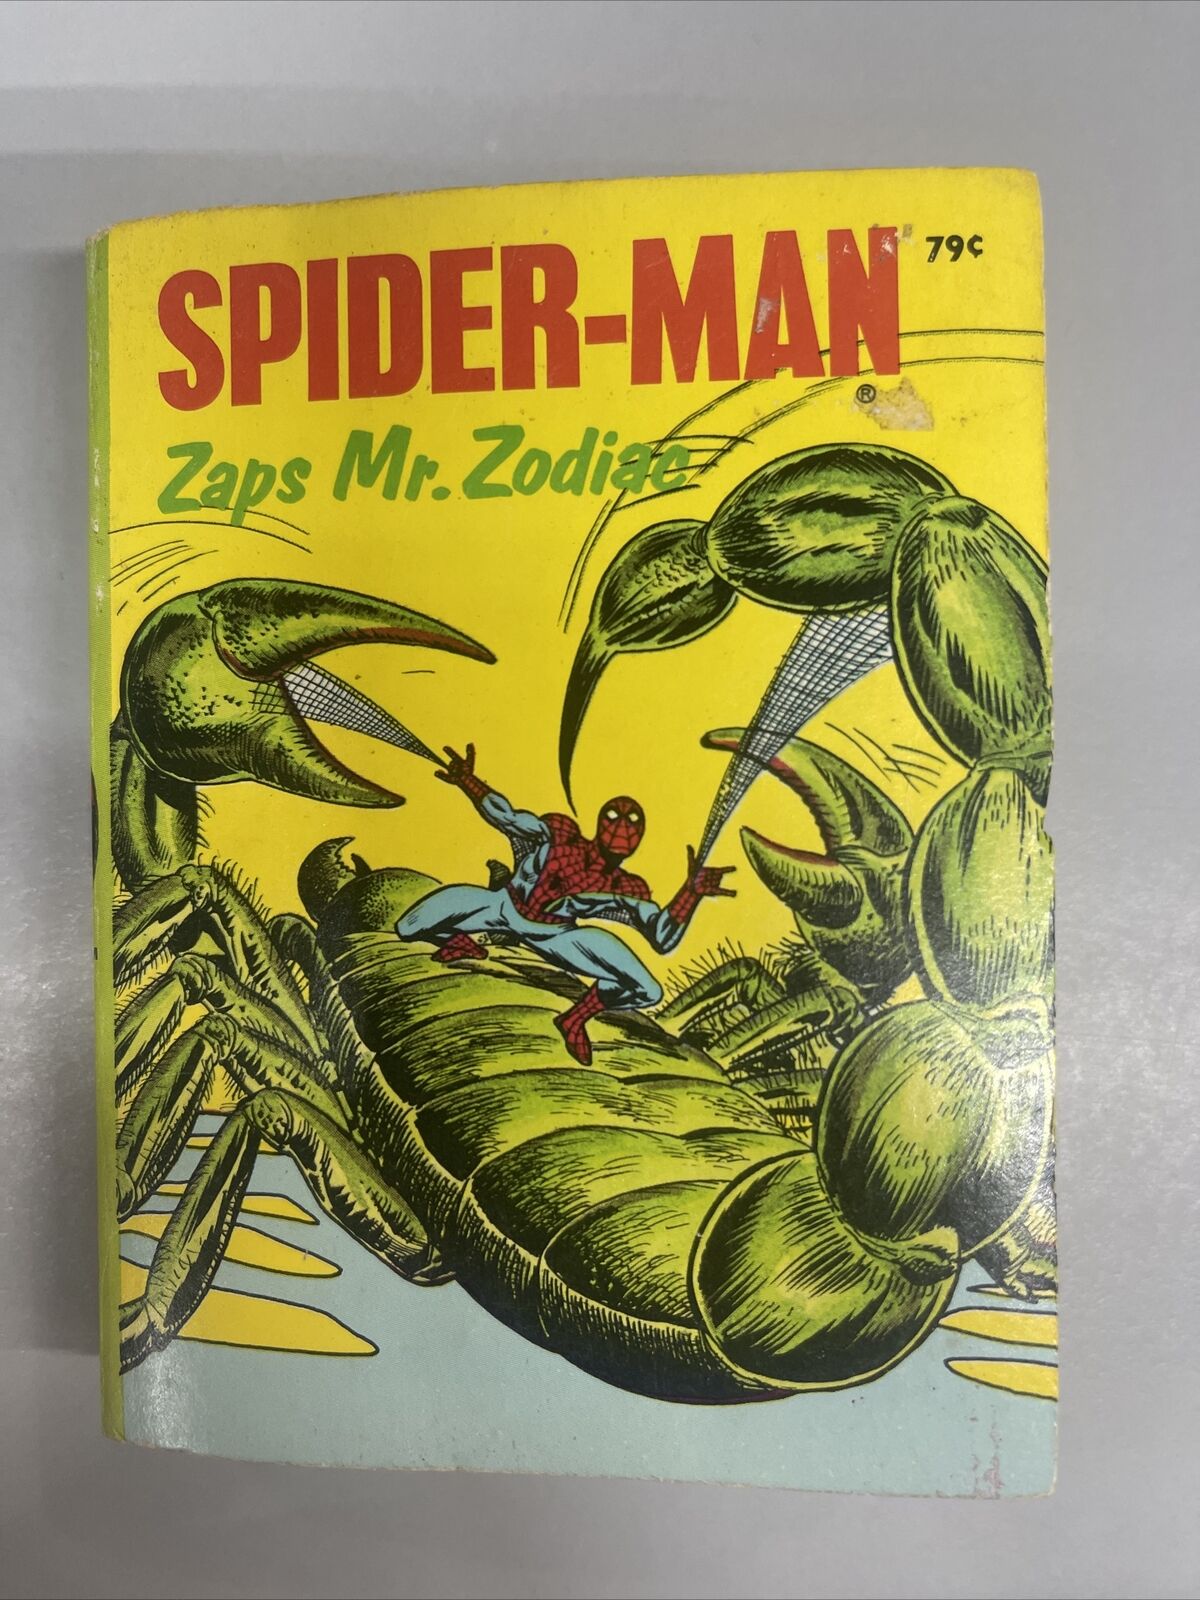 SPIDER-MAN Zaps Mr. Zodiac 5779-2 WHITMAN A Big Little Book - 1976 Paperback